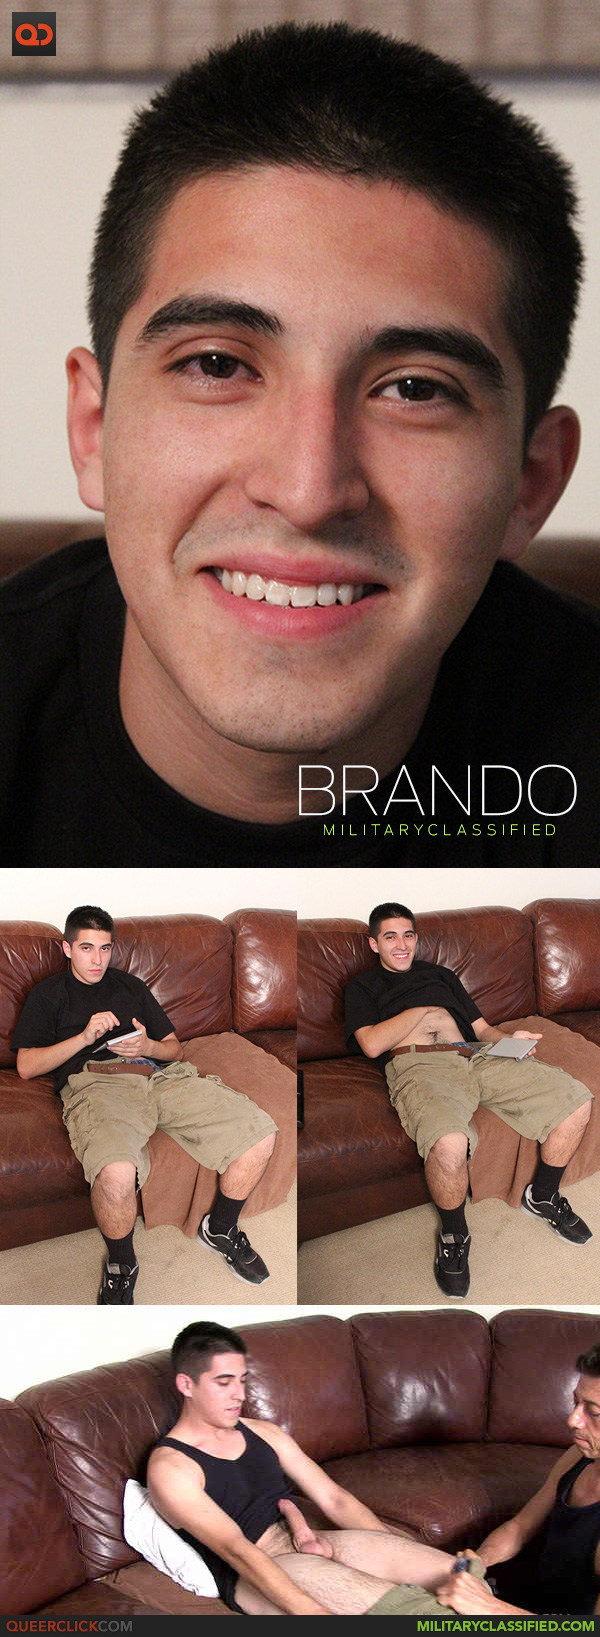 Military Classified: Brando